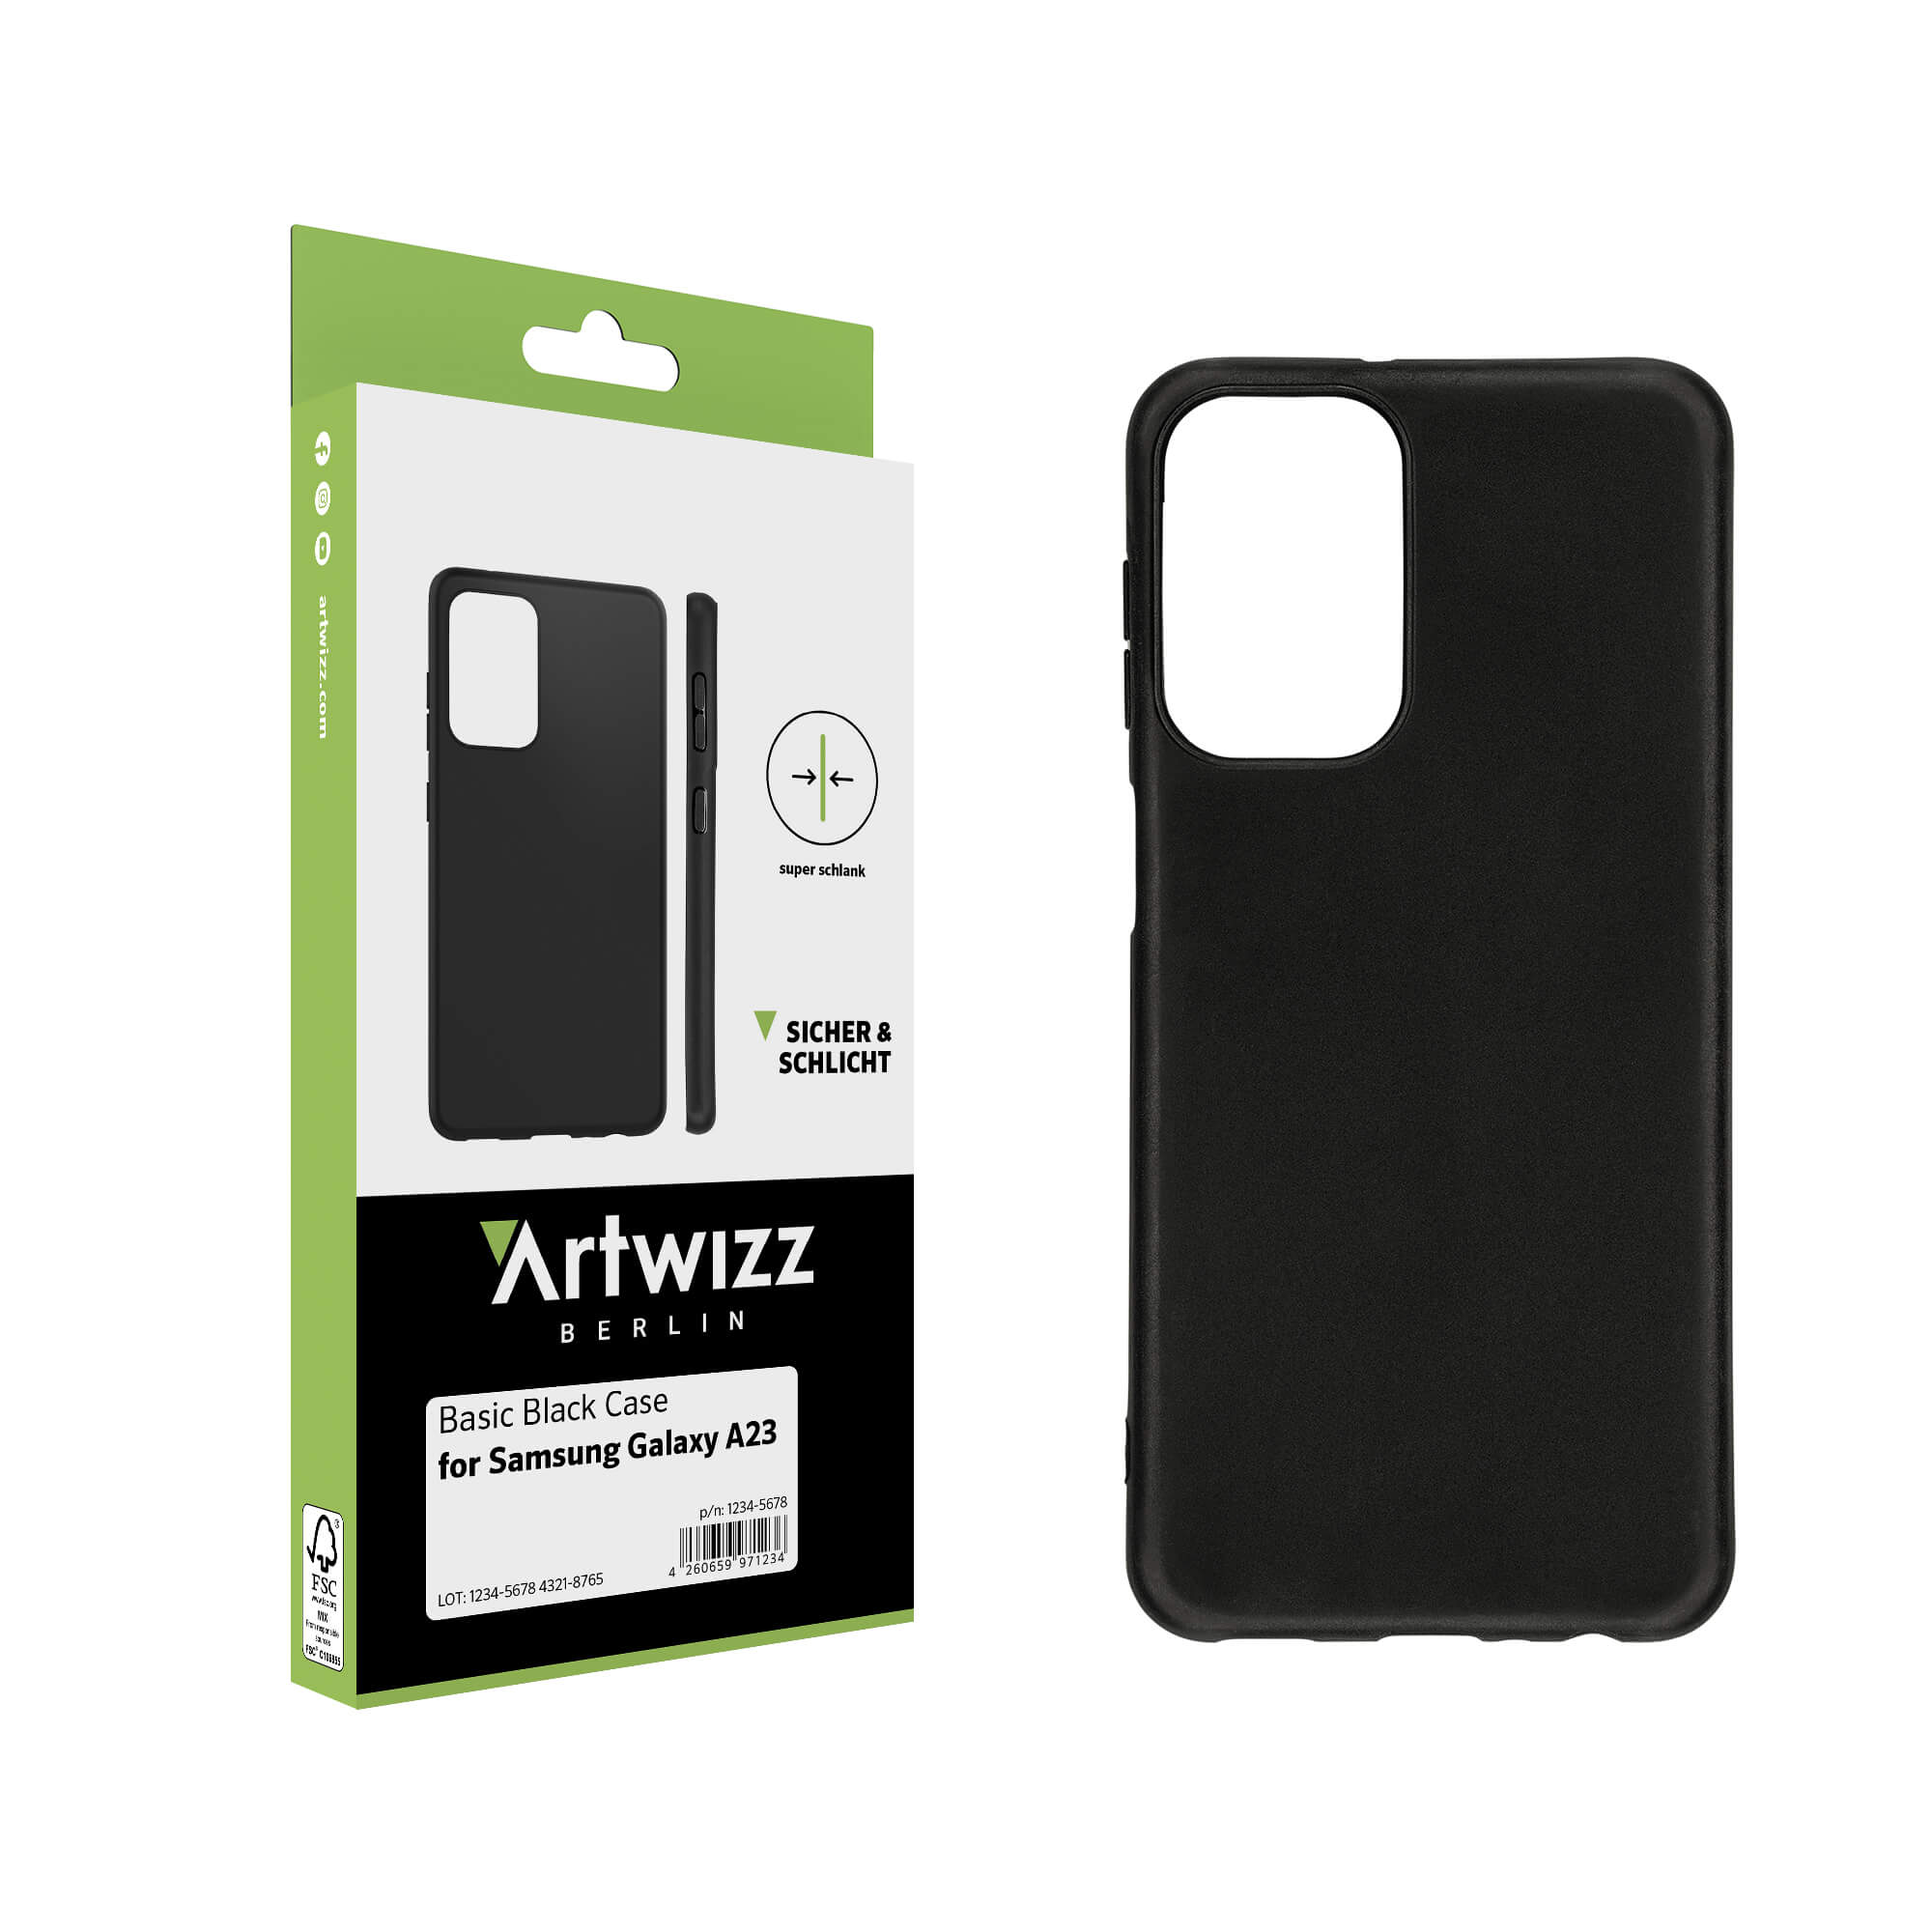 Backcover, Samsung, Schwarz A23, ARTWIZZ Galaxy Case, Black Basic